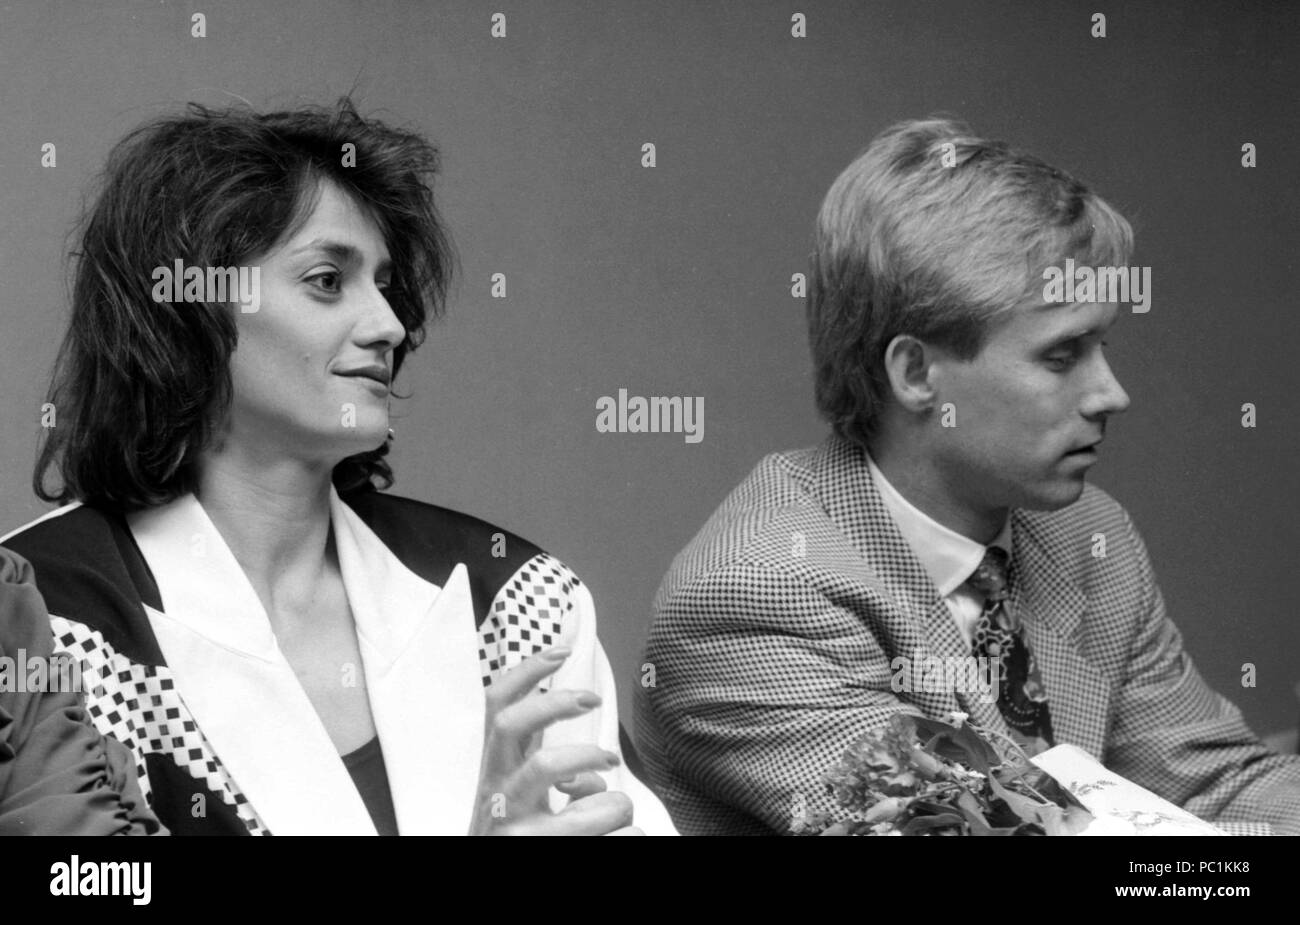 Nadia Comaneci et Bart Conner. Los Angeles, CA, États-Unis, 1993. Banque D'Images